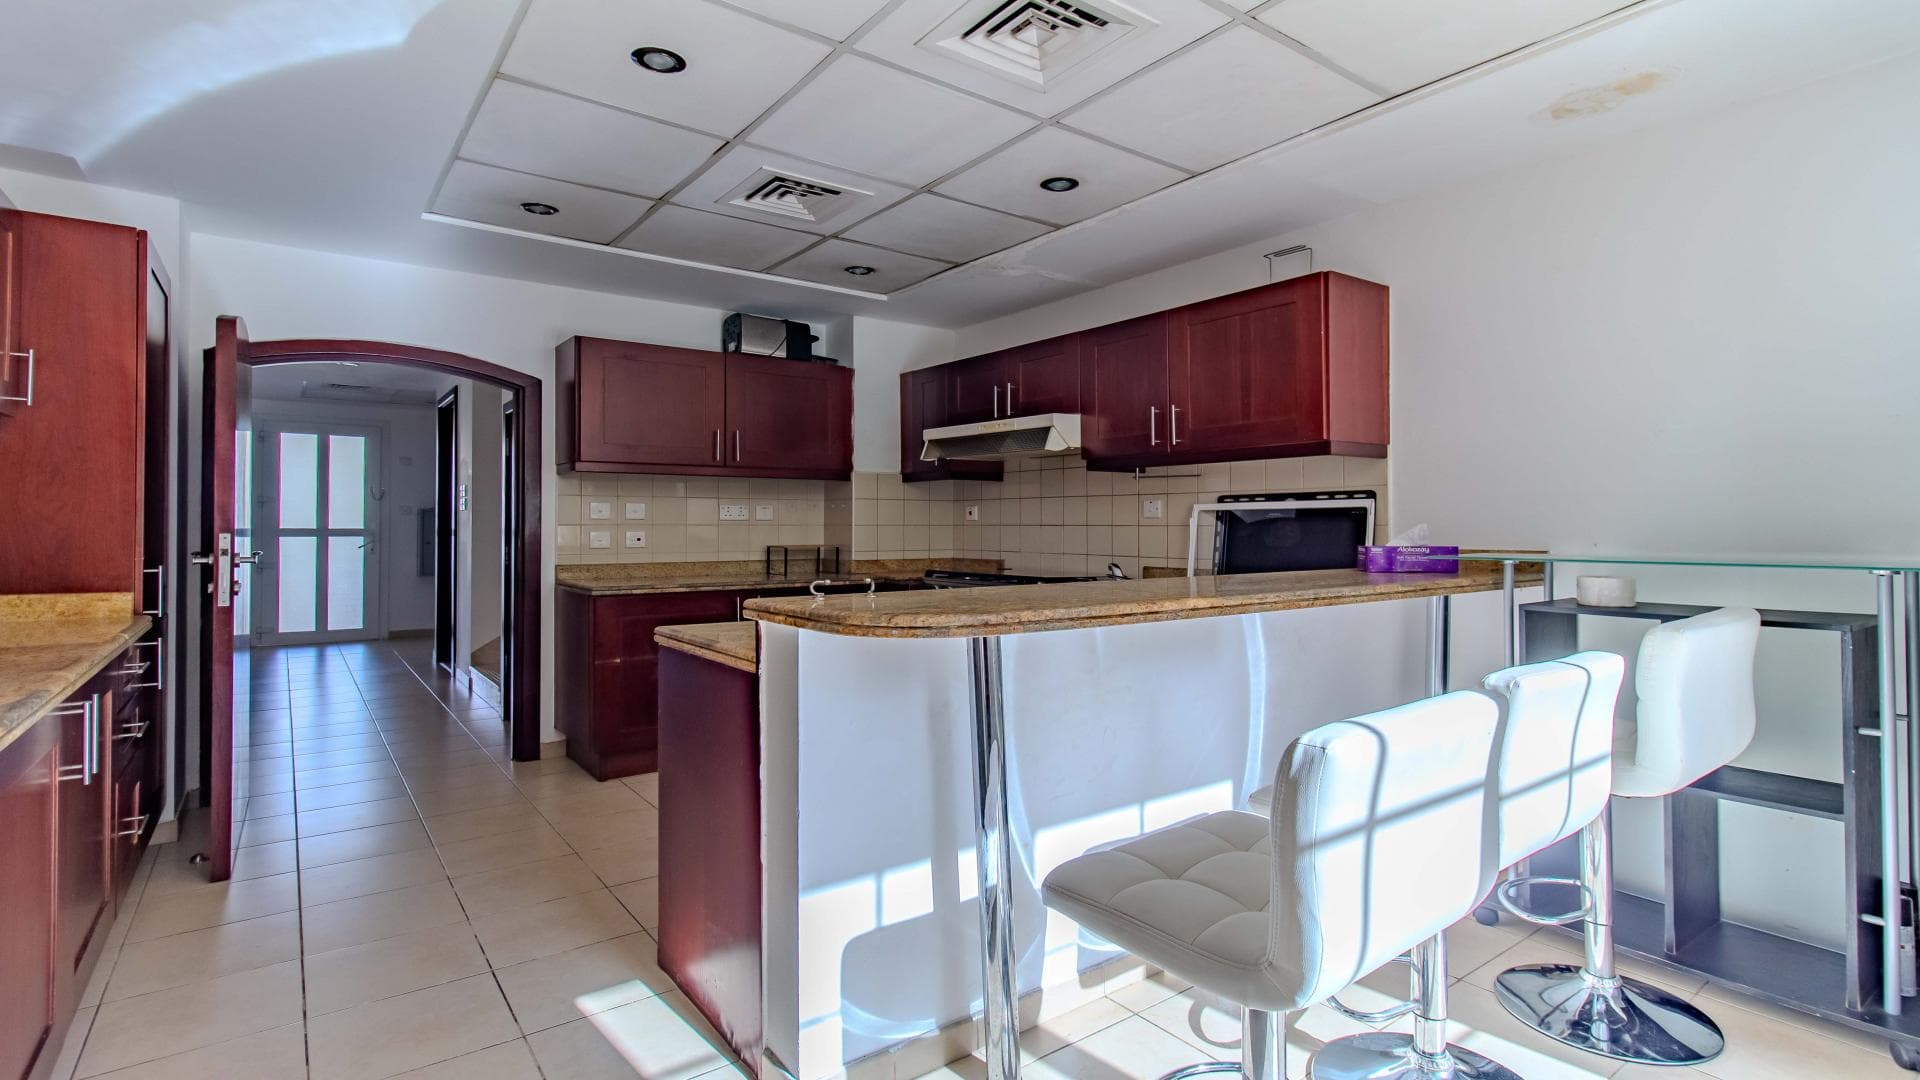 3 Bedroom Villa For Rent Jumeirah Business Centre 5 Lp38947 1e2ee5c6349c1900.jpg